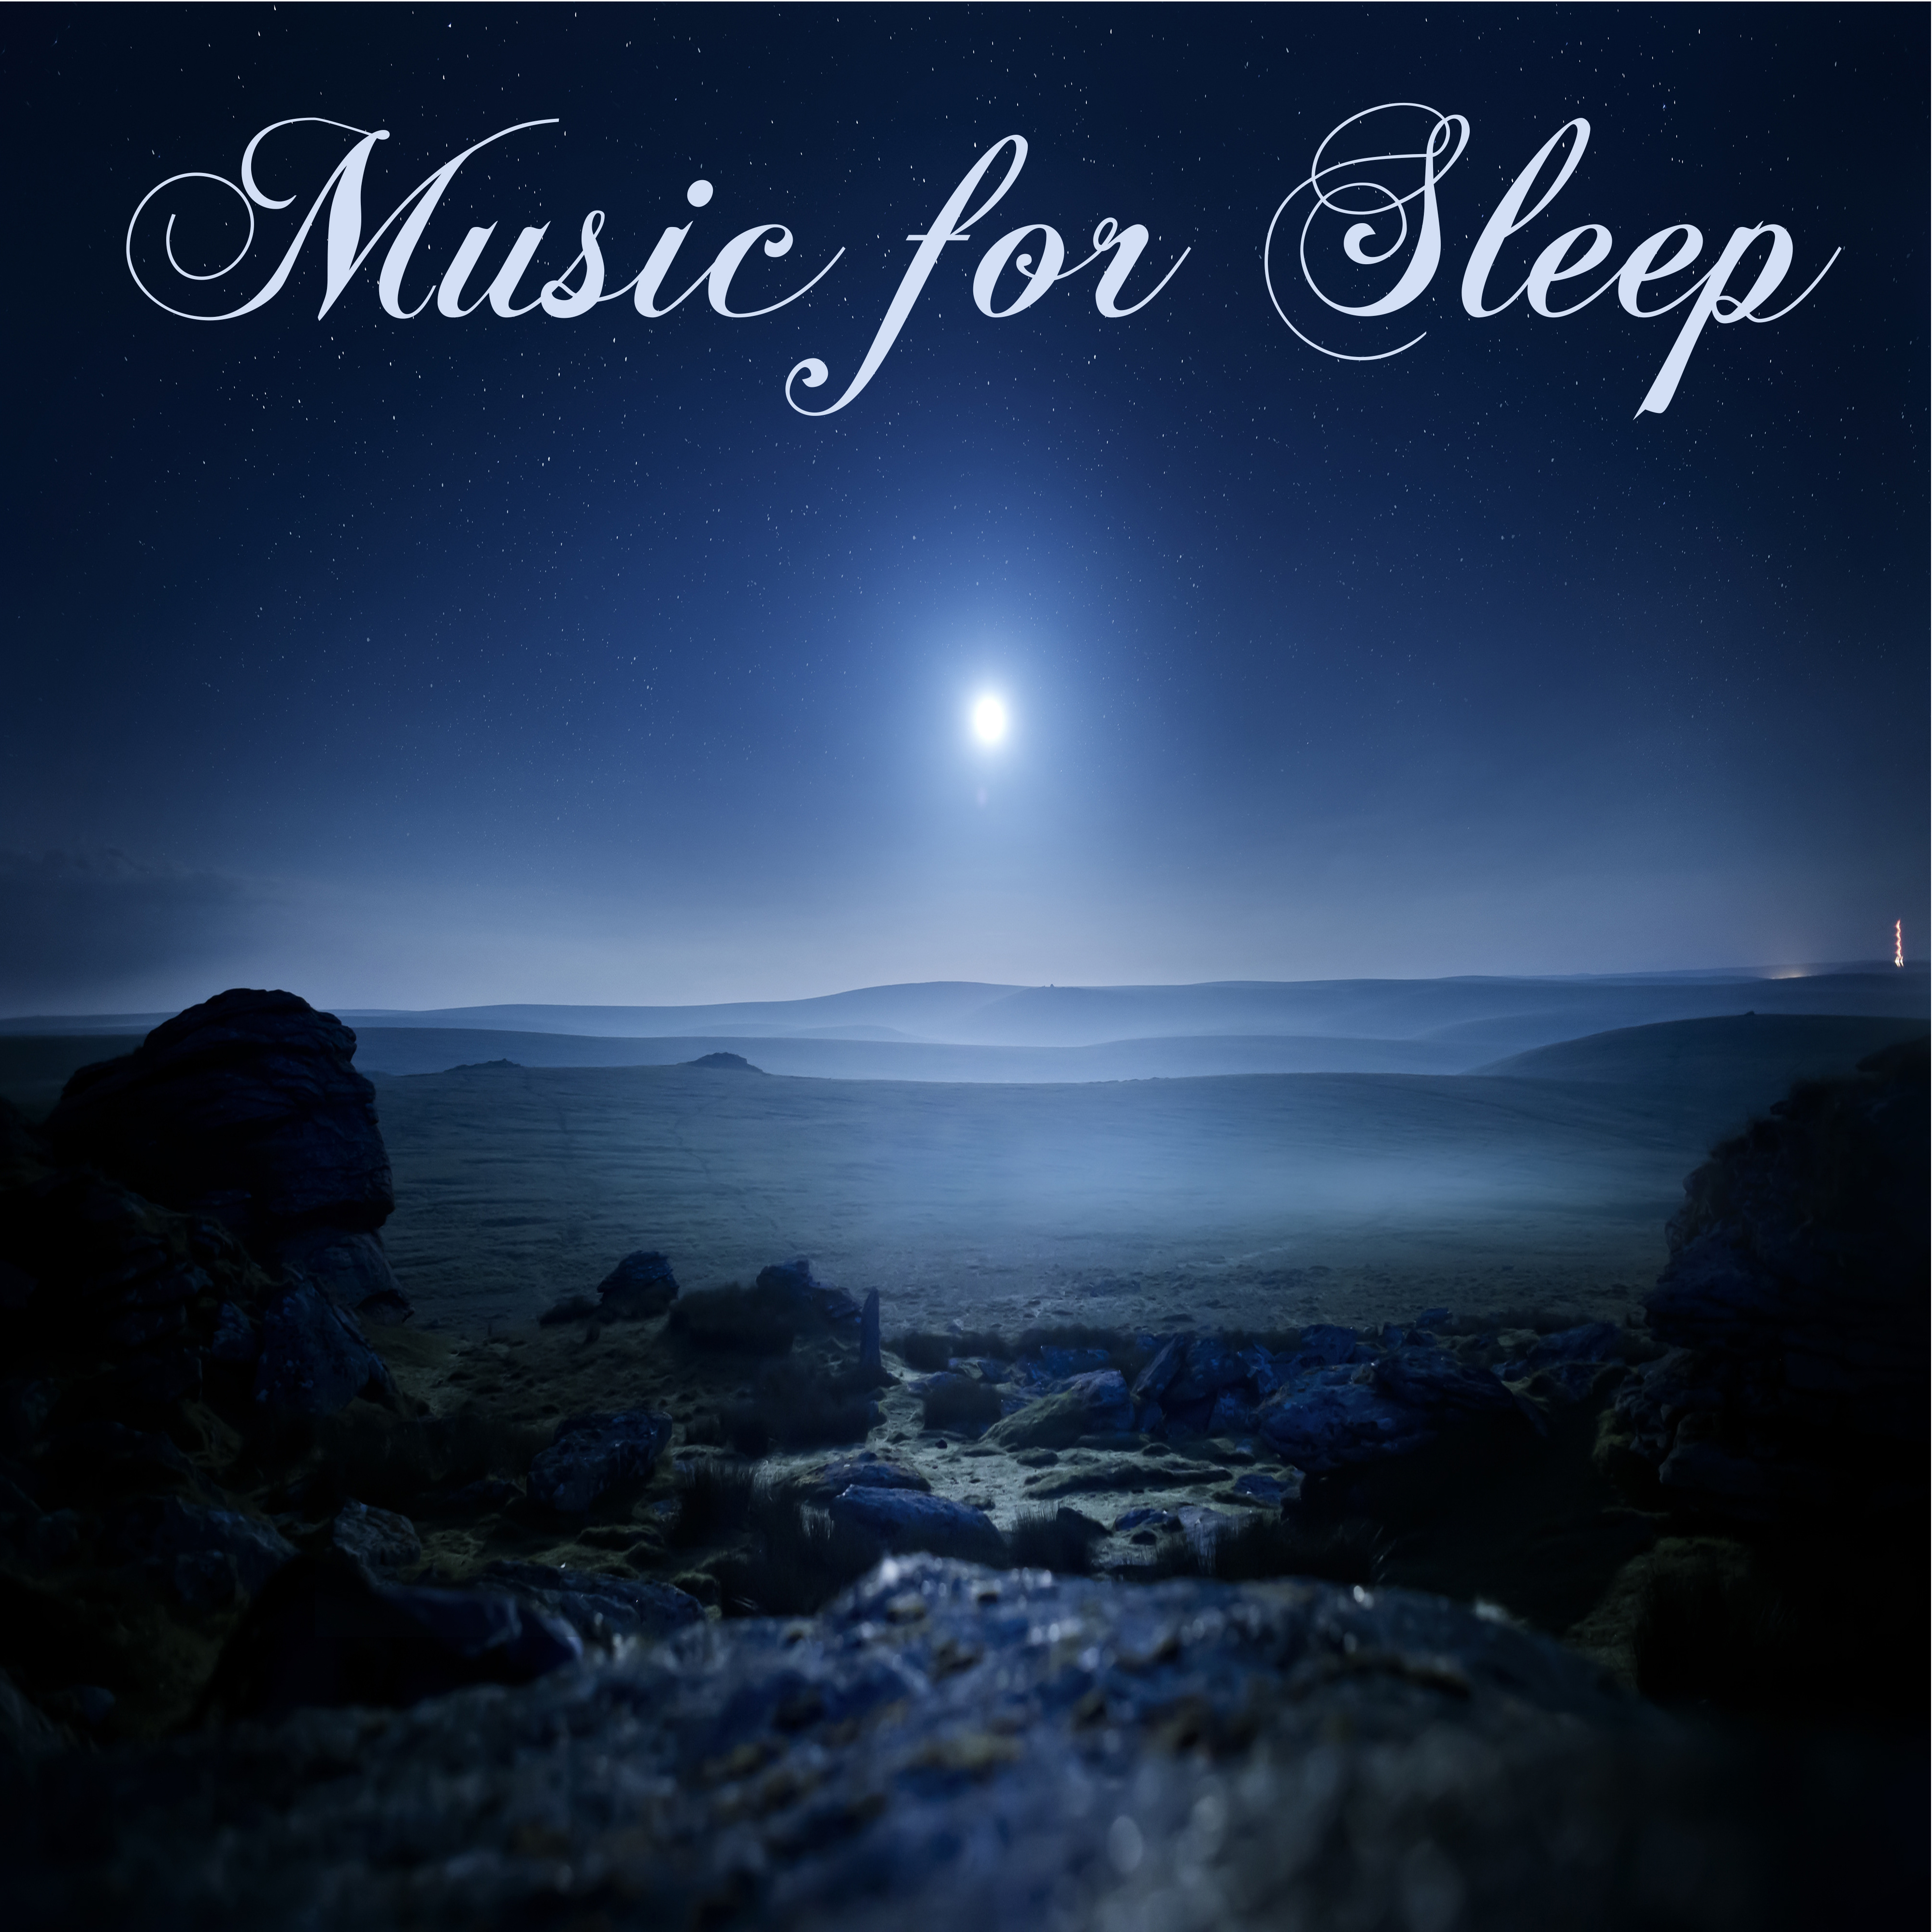 Calming Music to Fall Asleep